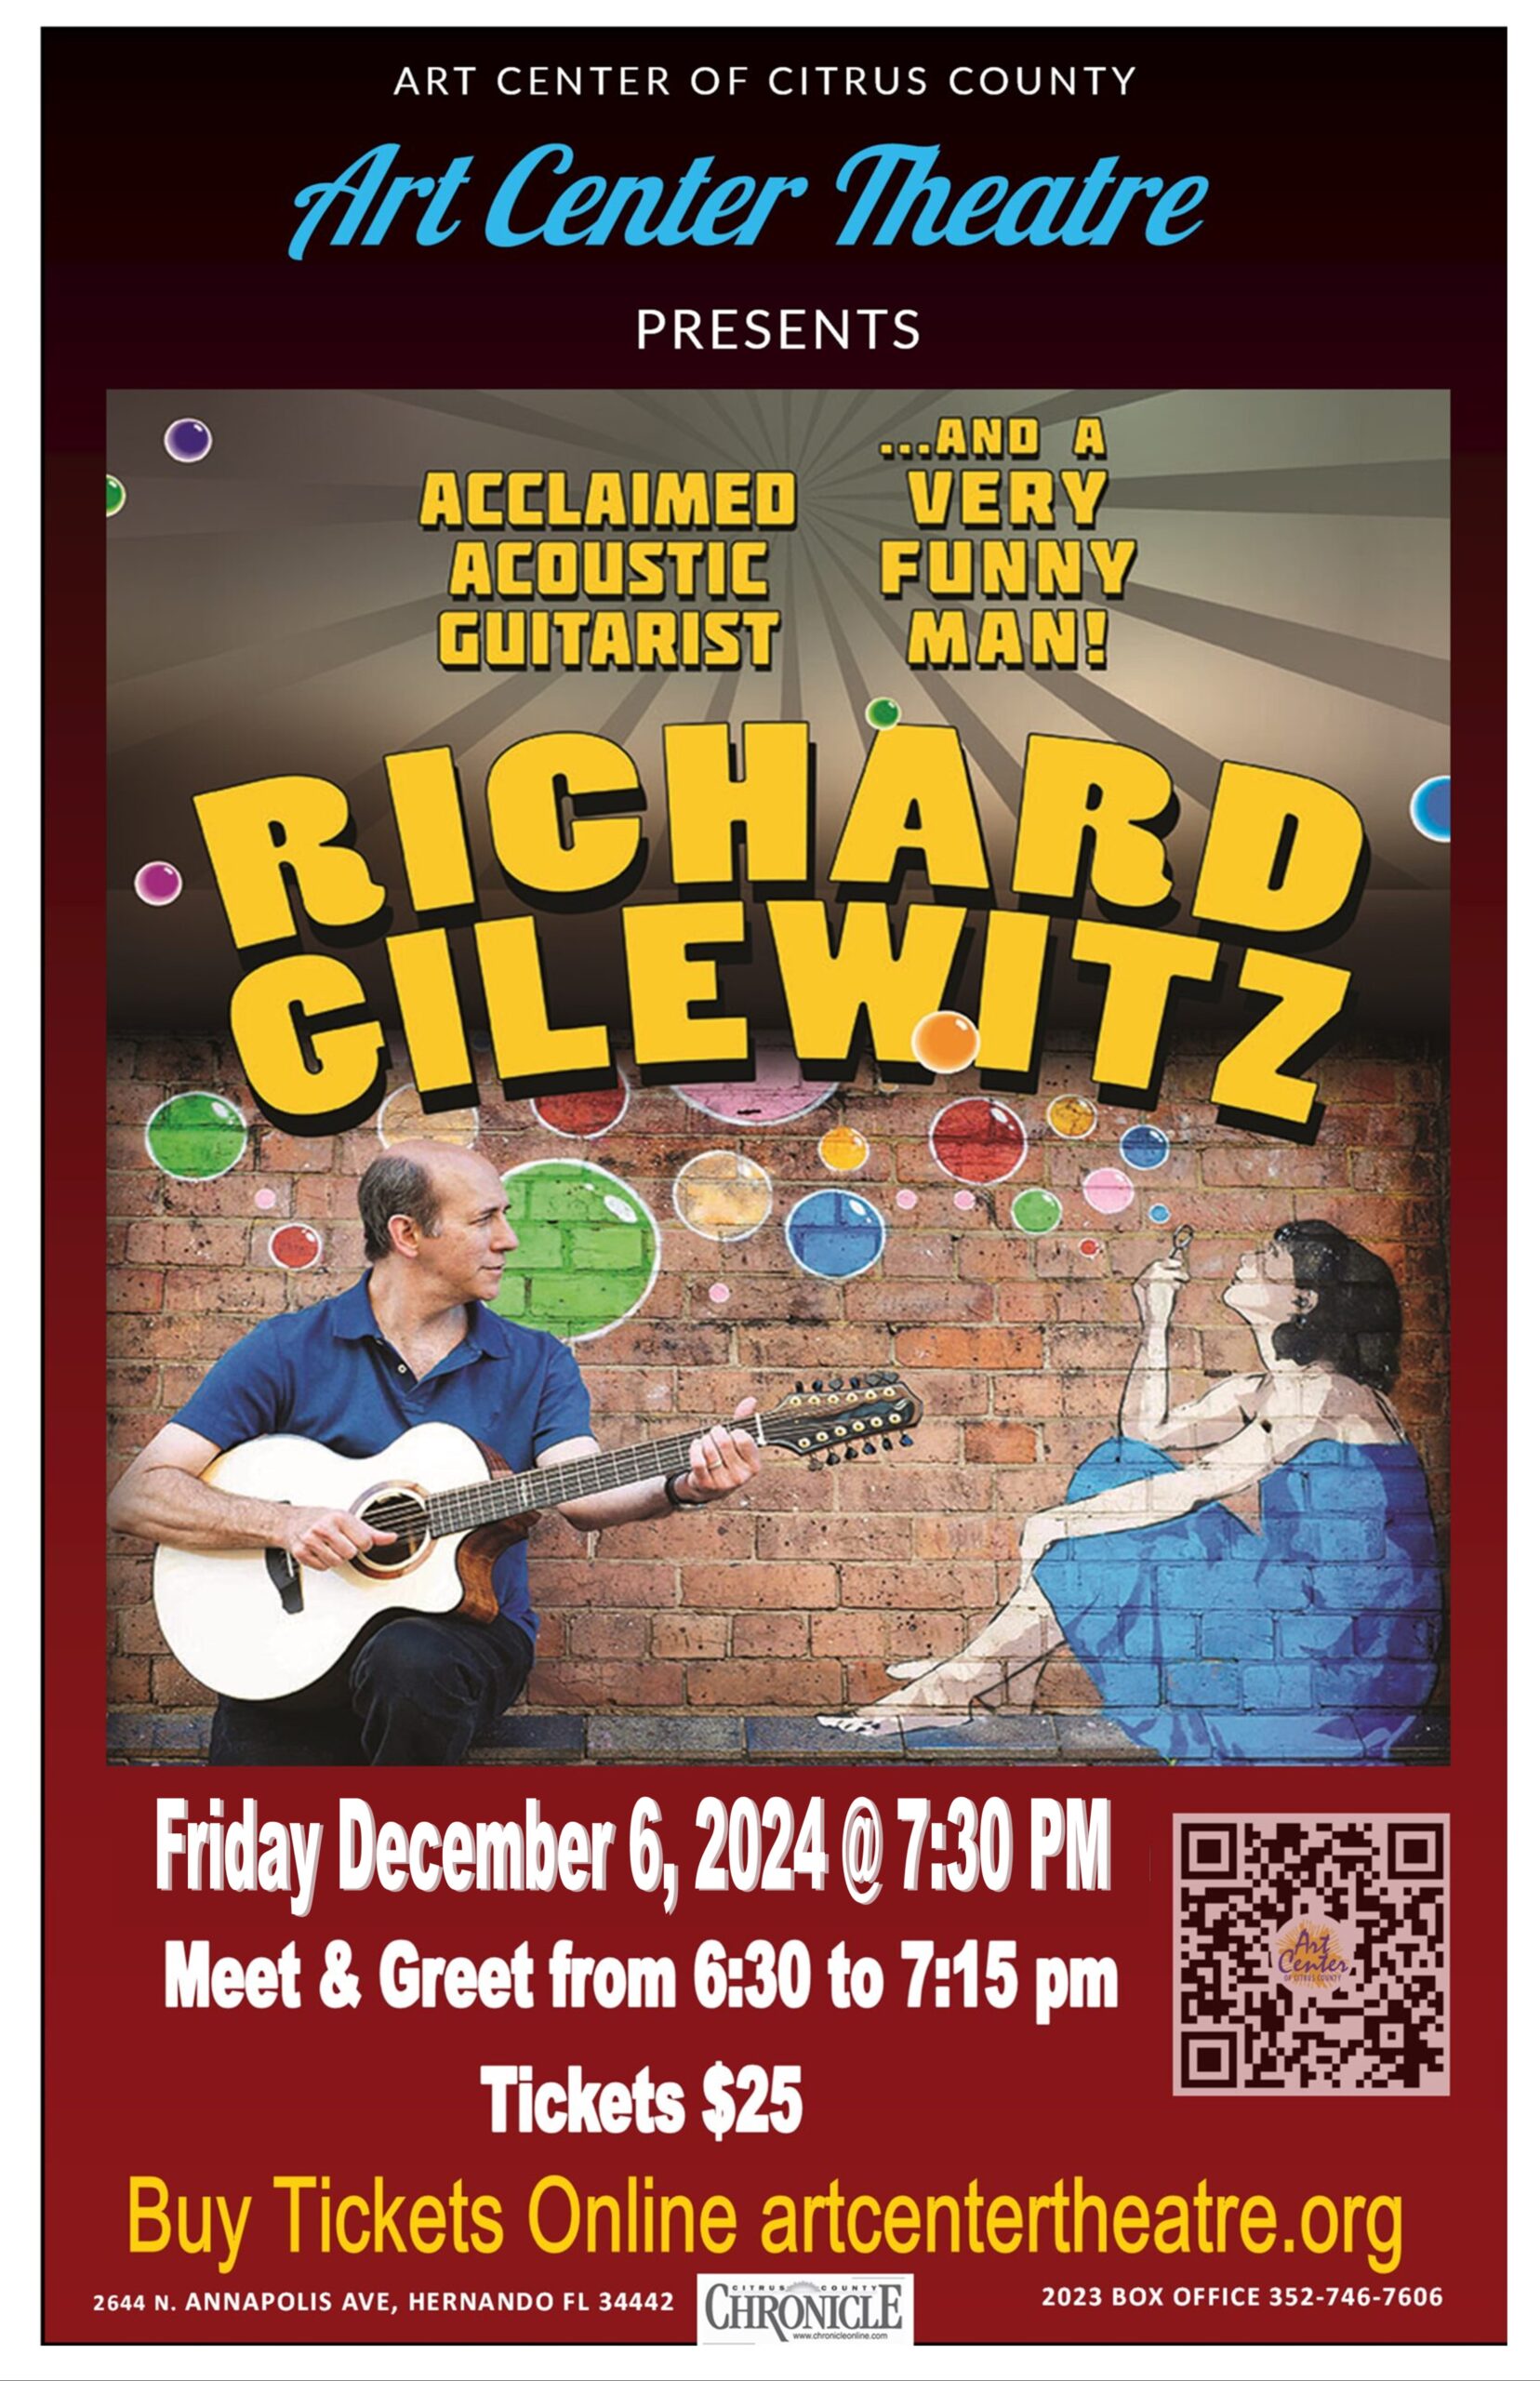 Art Center Theatre Presents: Richard Gilewitz Guitar Concert